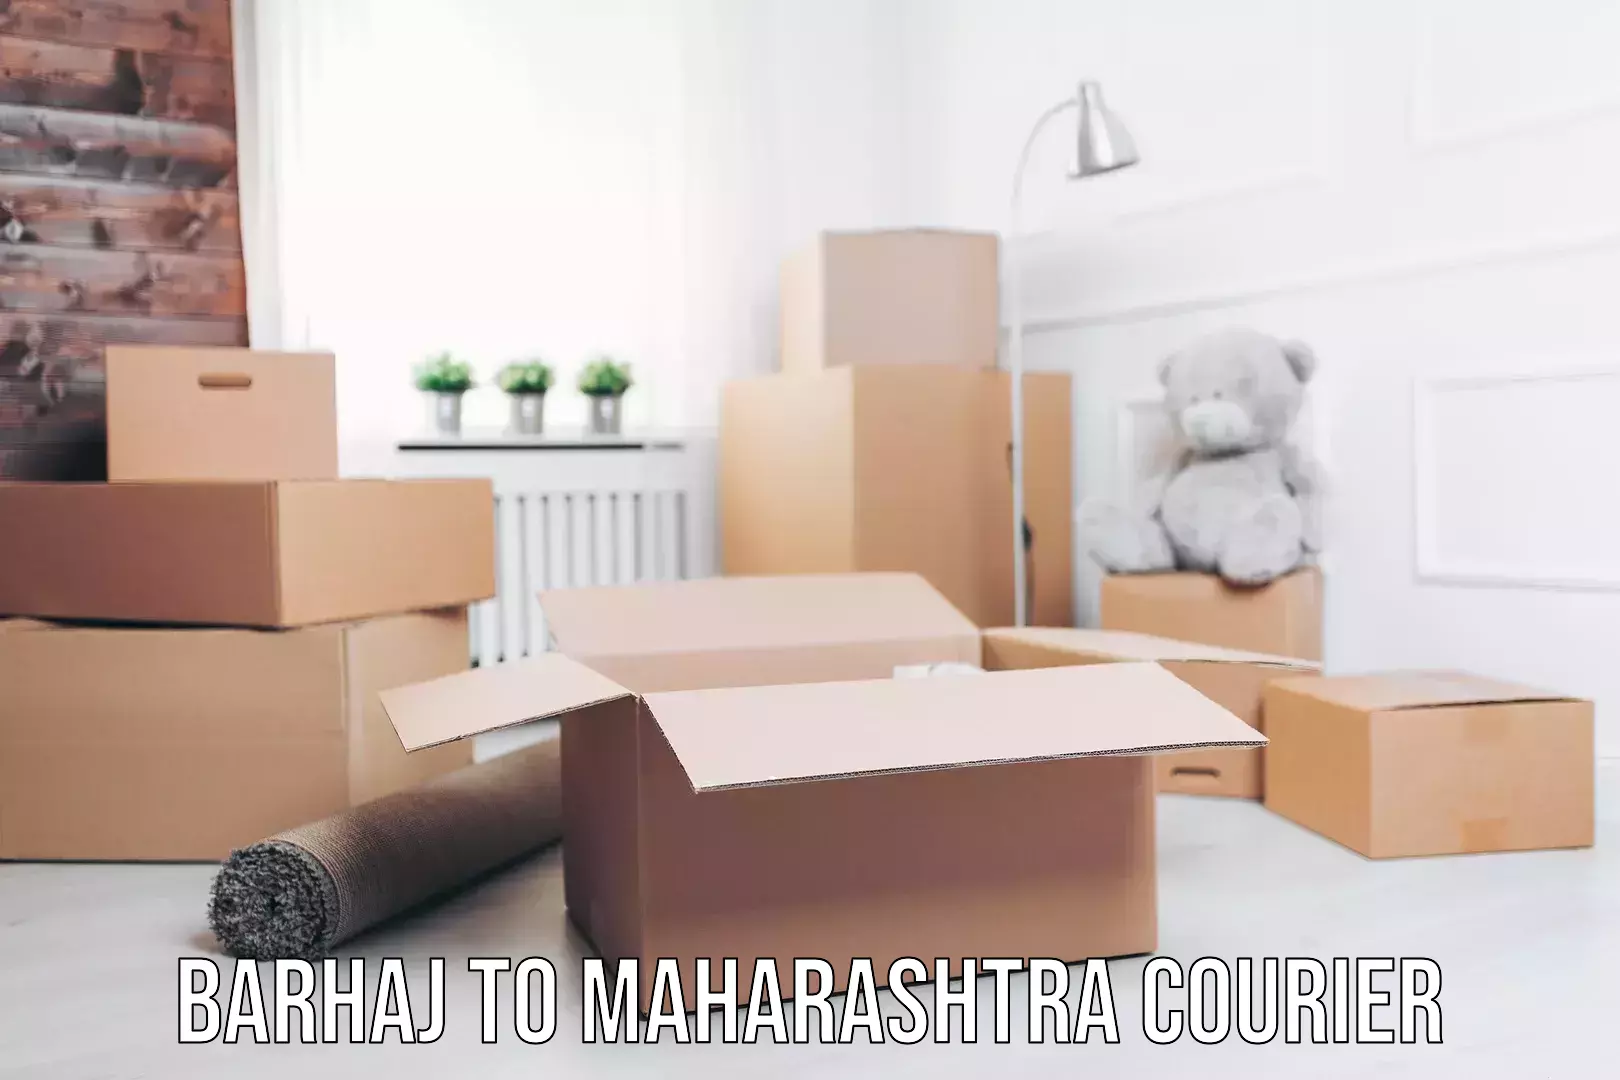 Modern courier technology in Barhaj to Maharashtra